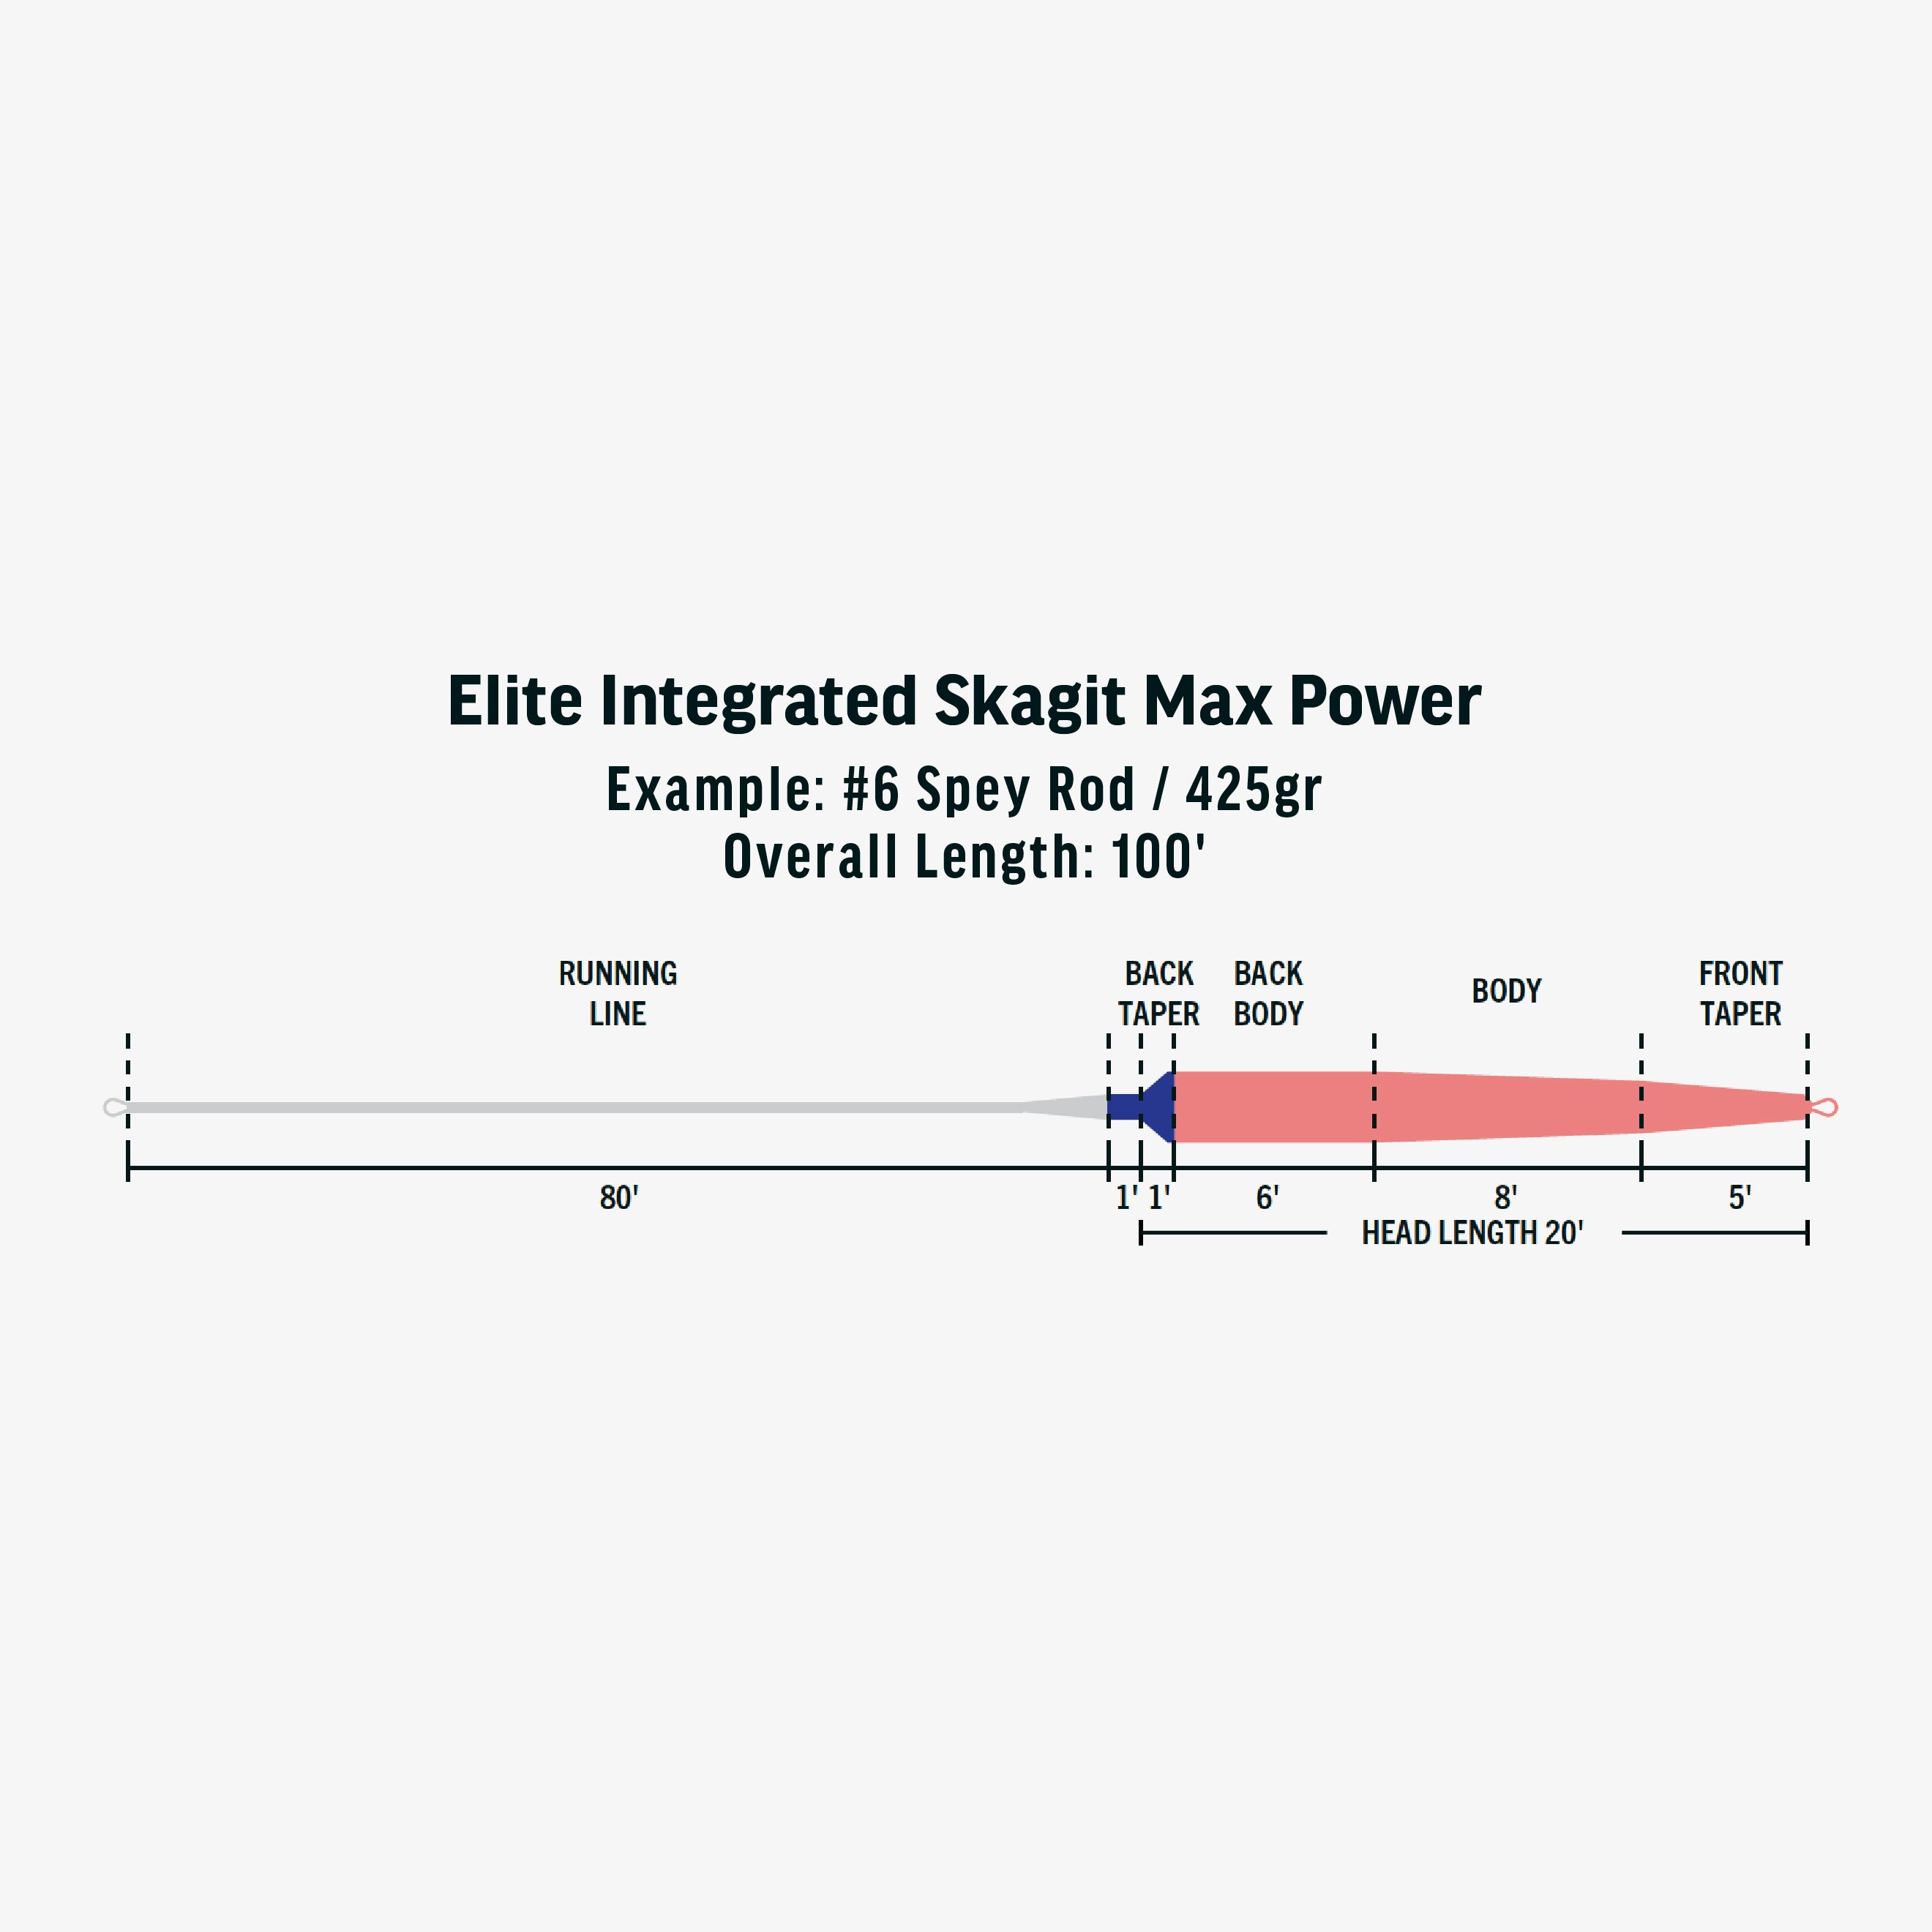 Elite Integrated Skagit Max Power